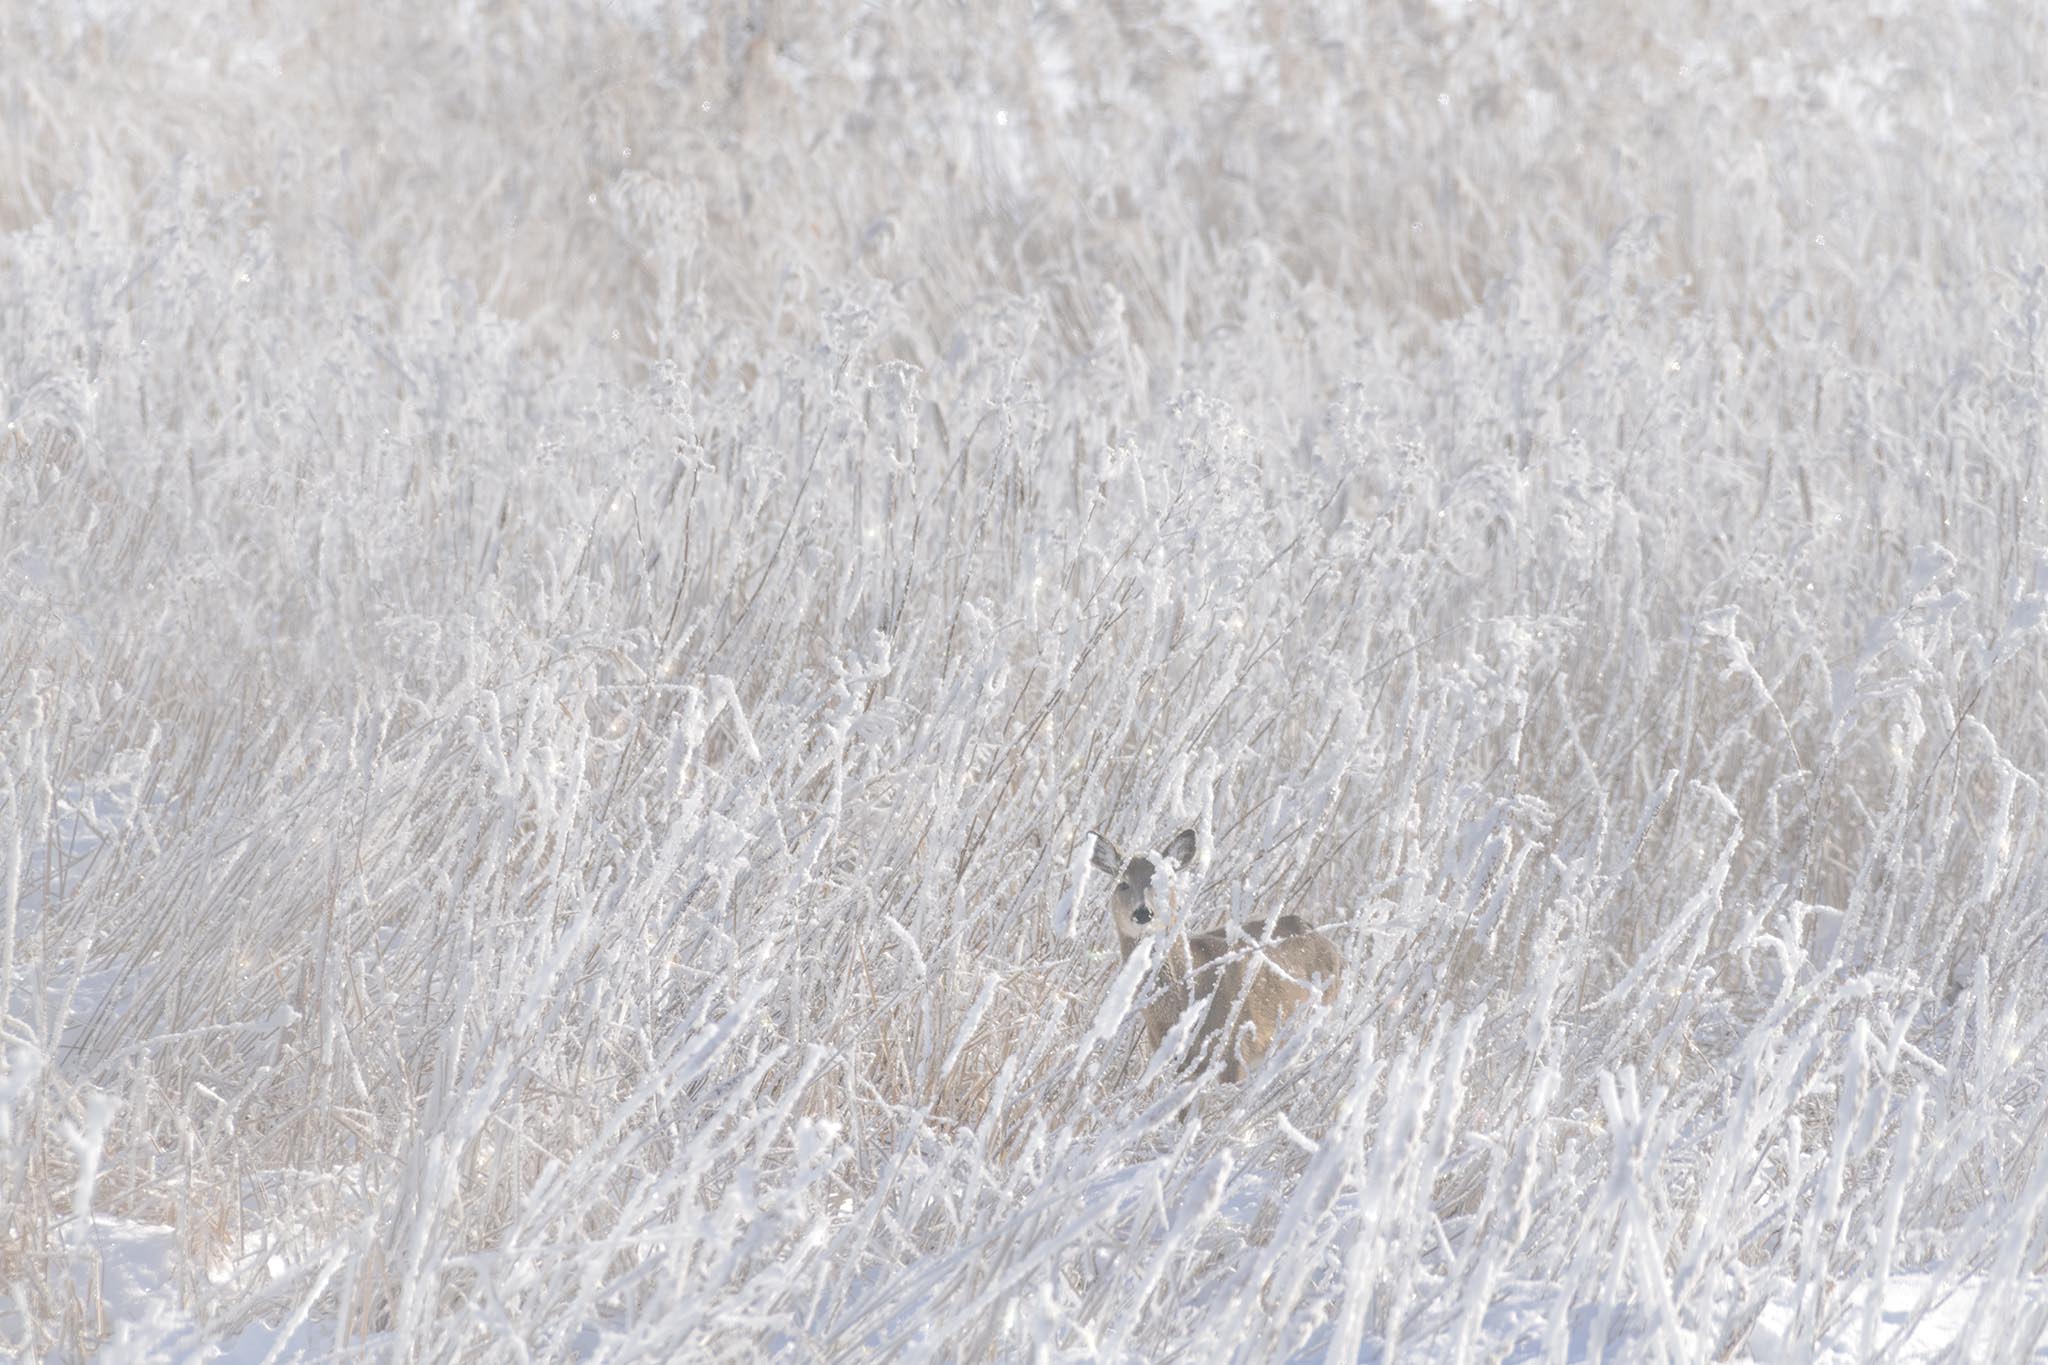 Deer Walking Through Frosted Field